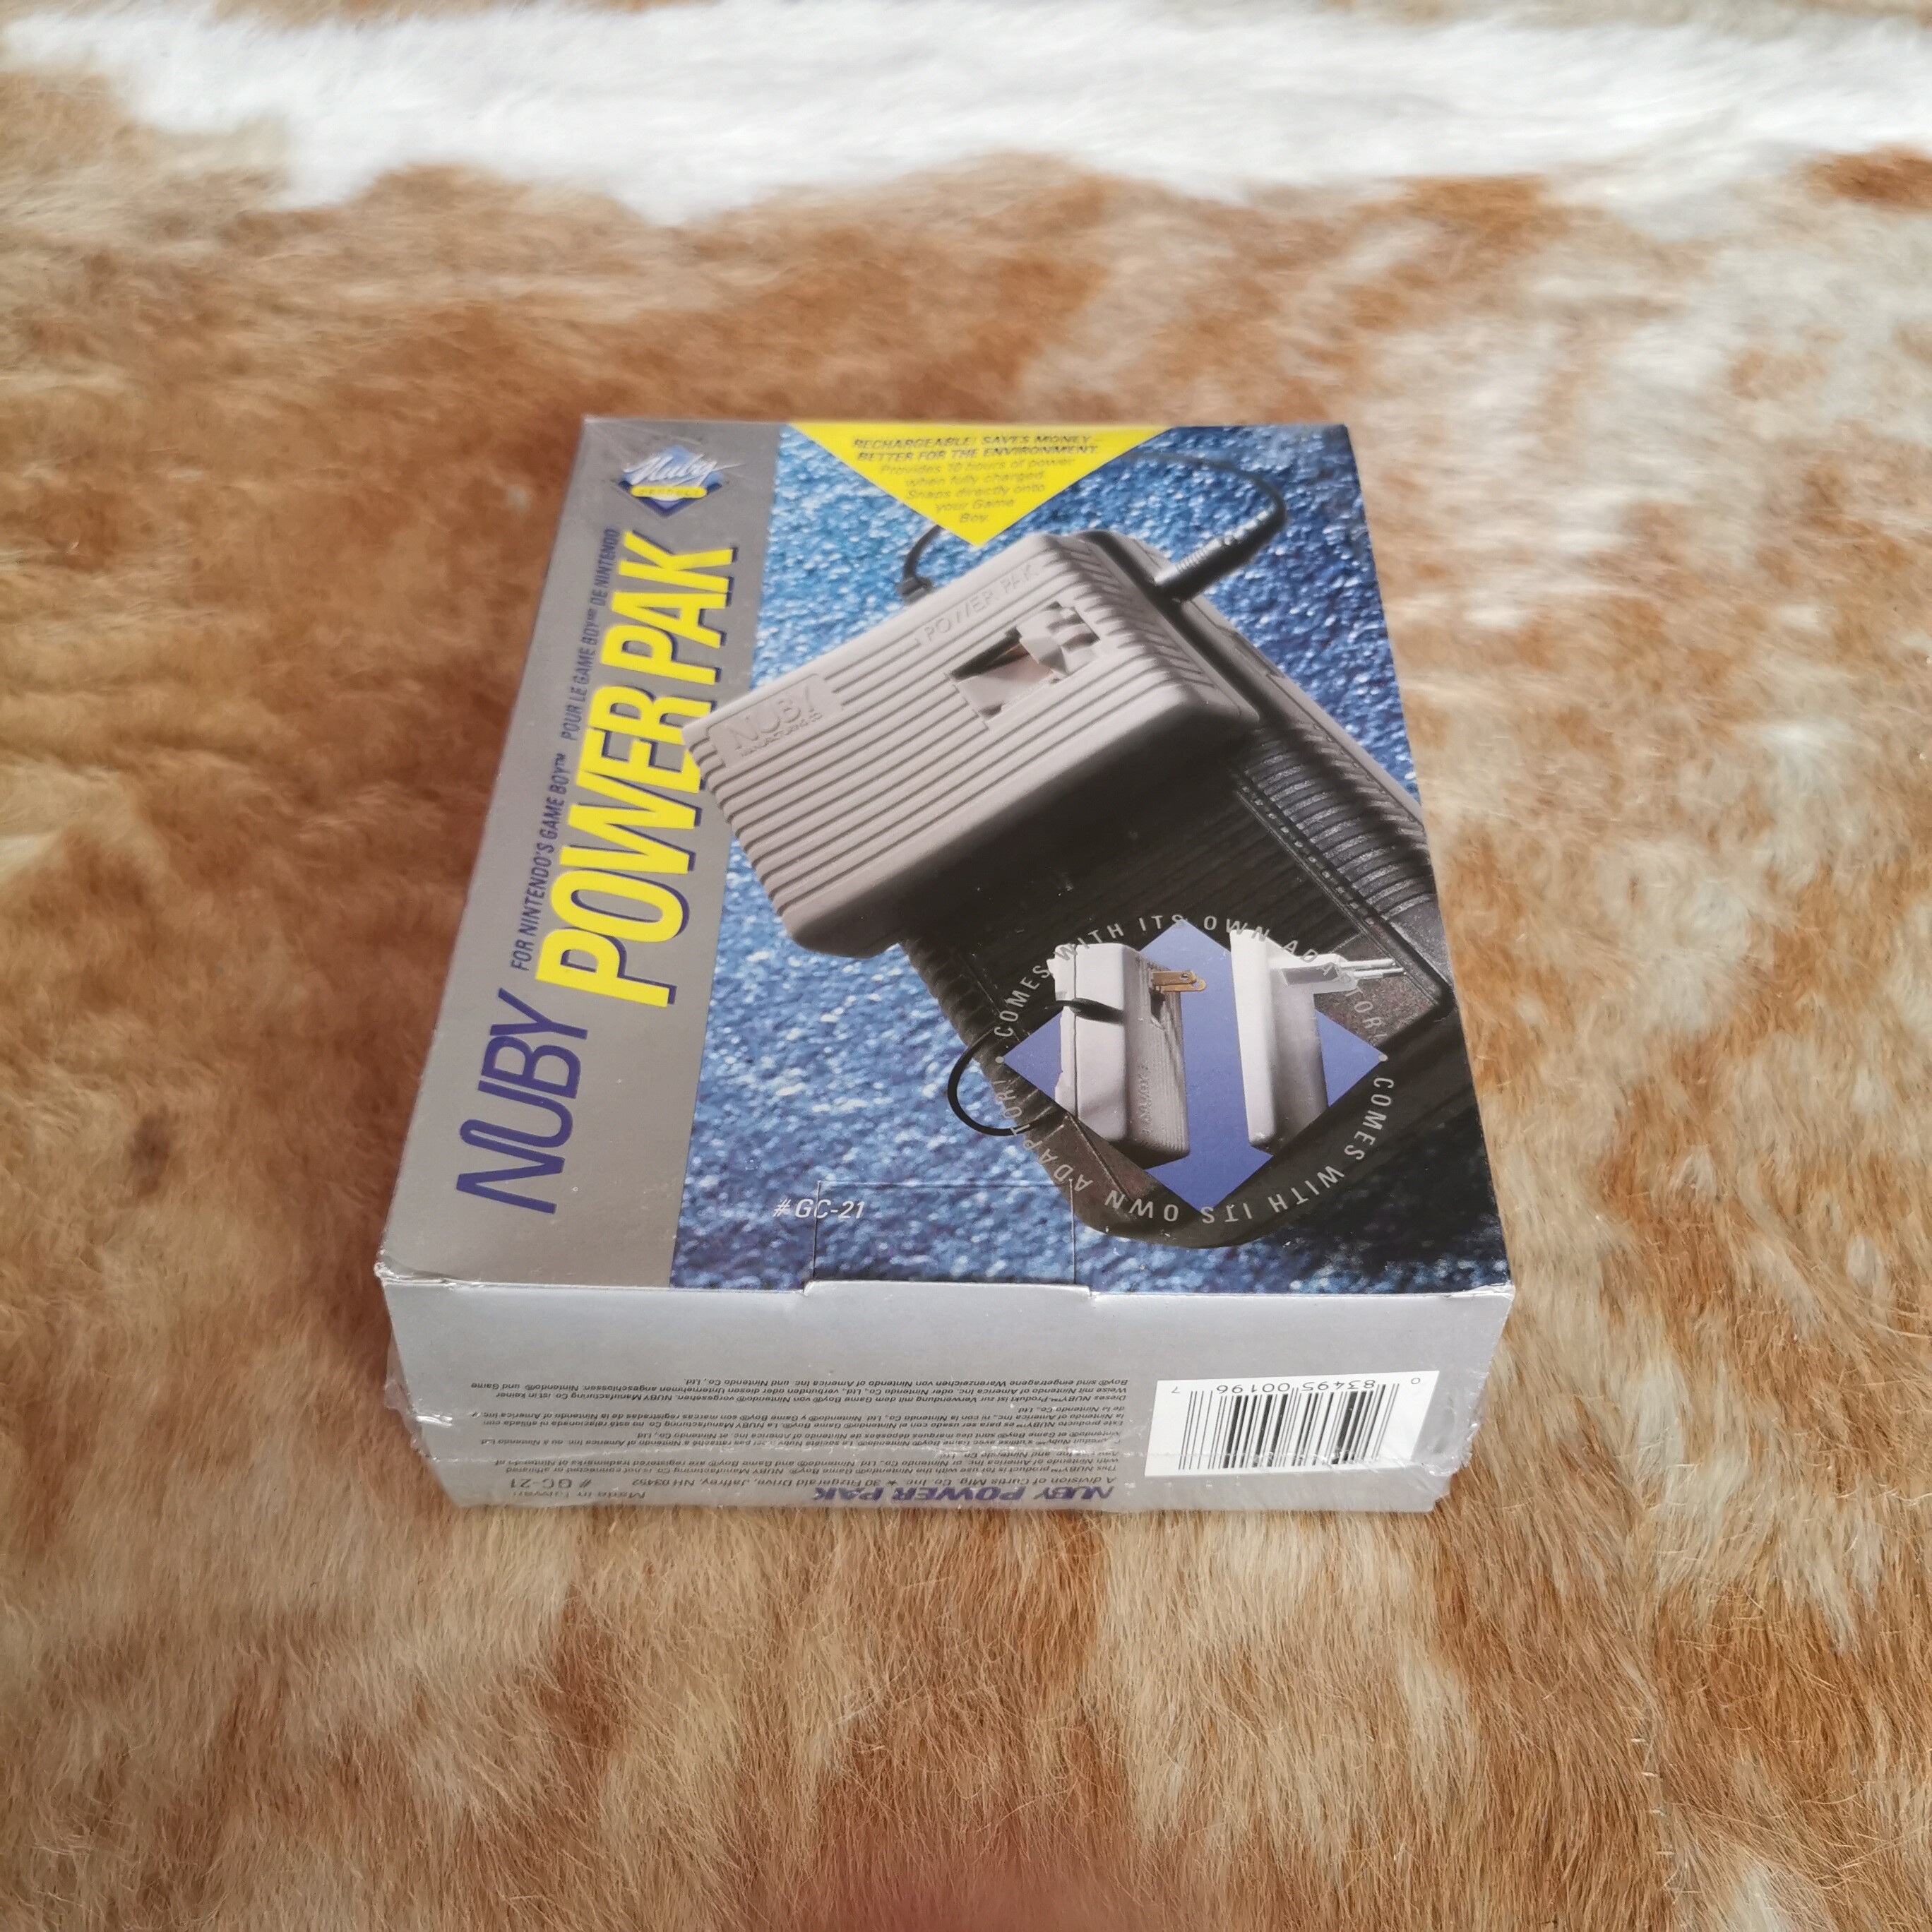 Nuby Game Boy Power Pak